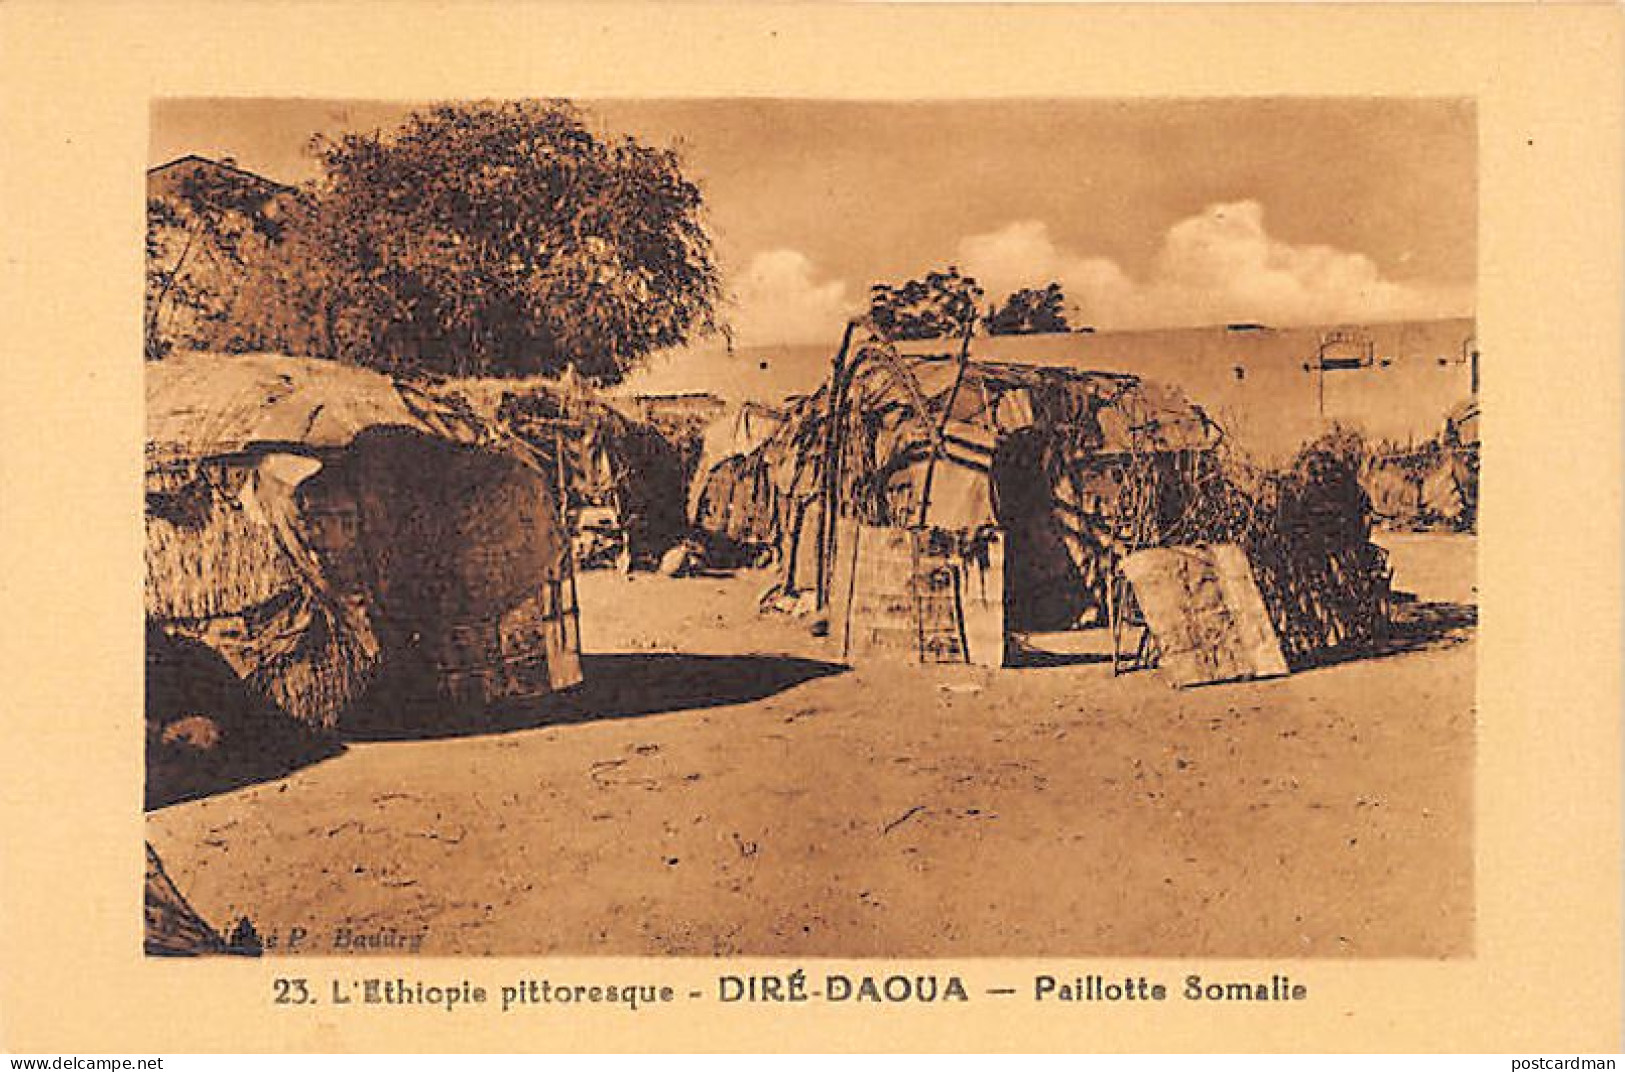 Ethiopia - DIRE DAWA - Somali Straw Hut - Publ. Printing Works Of The Dire Dawa Catholic Mission - Photographer P. Baudr - Etiopía